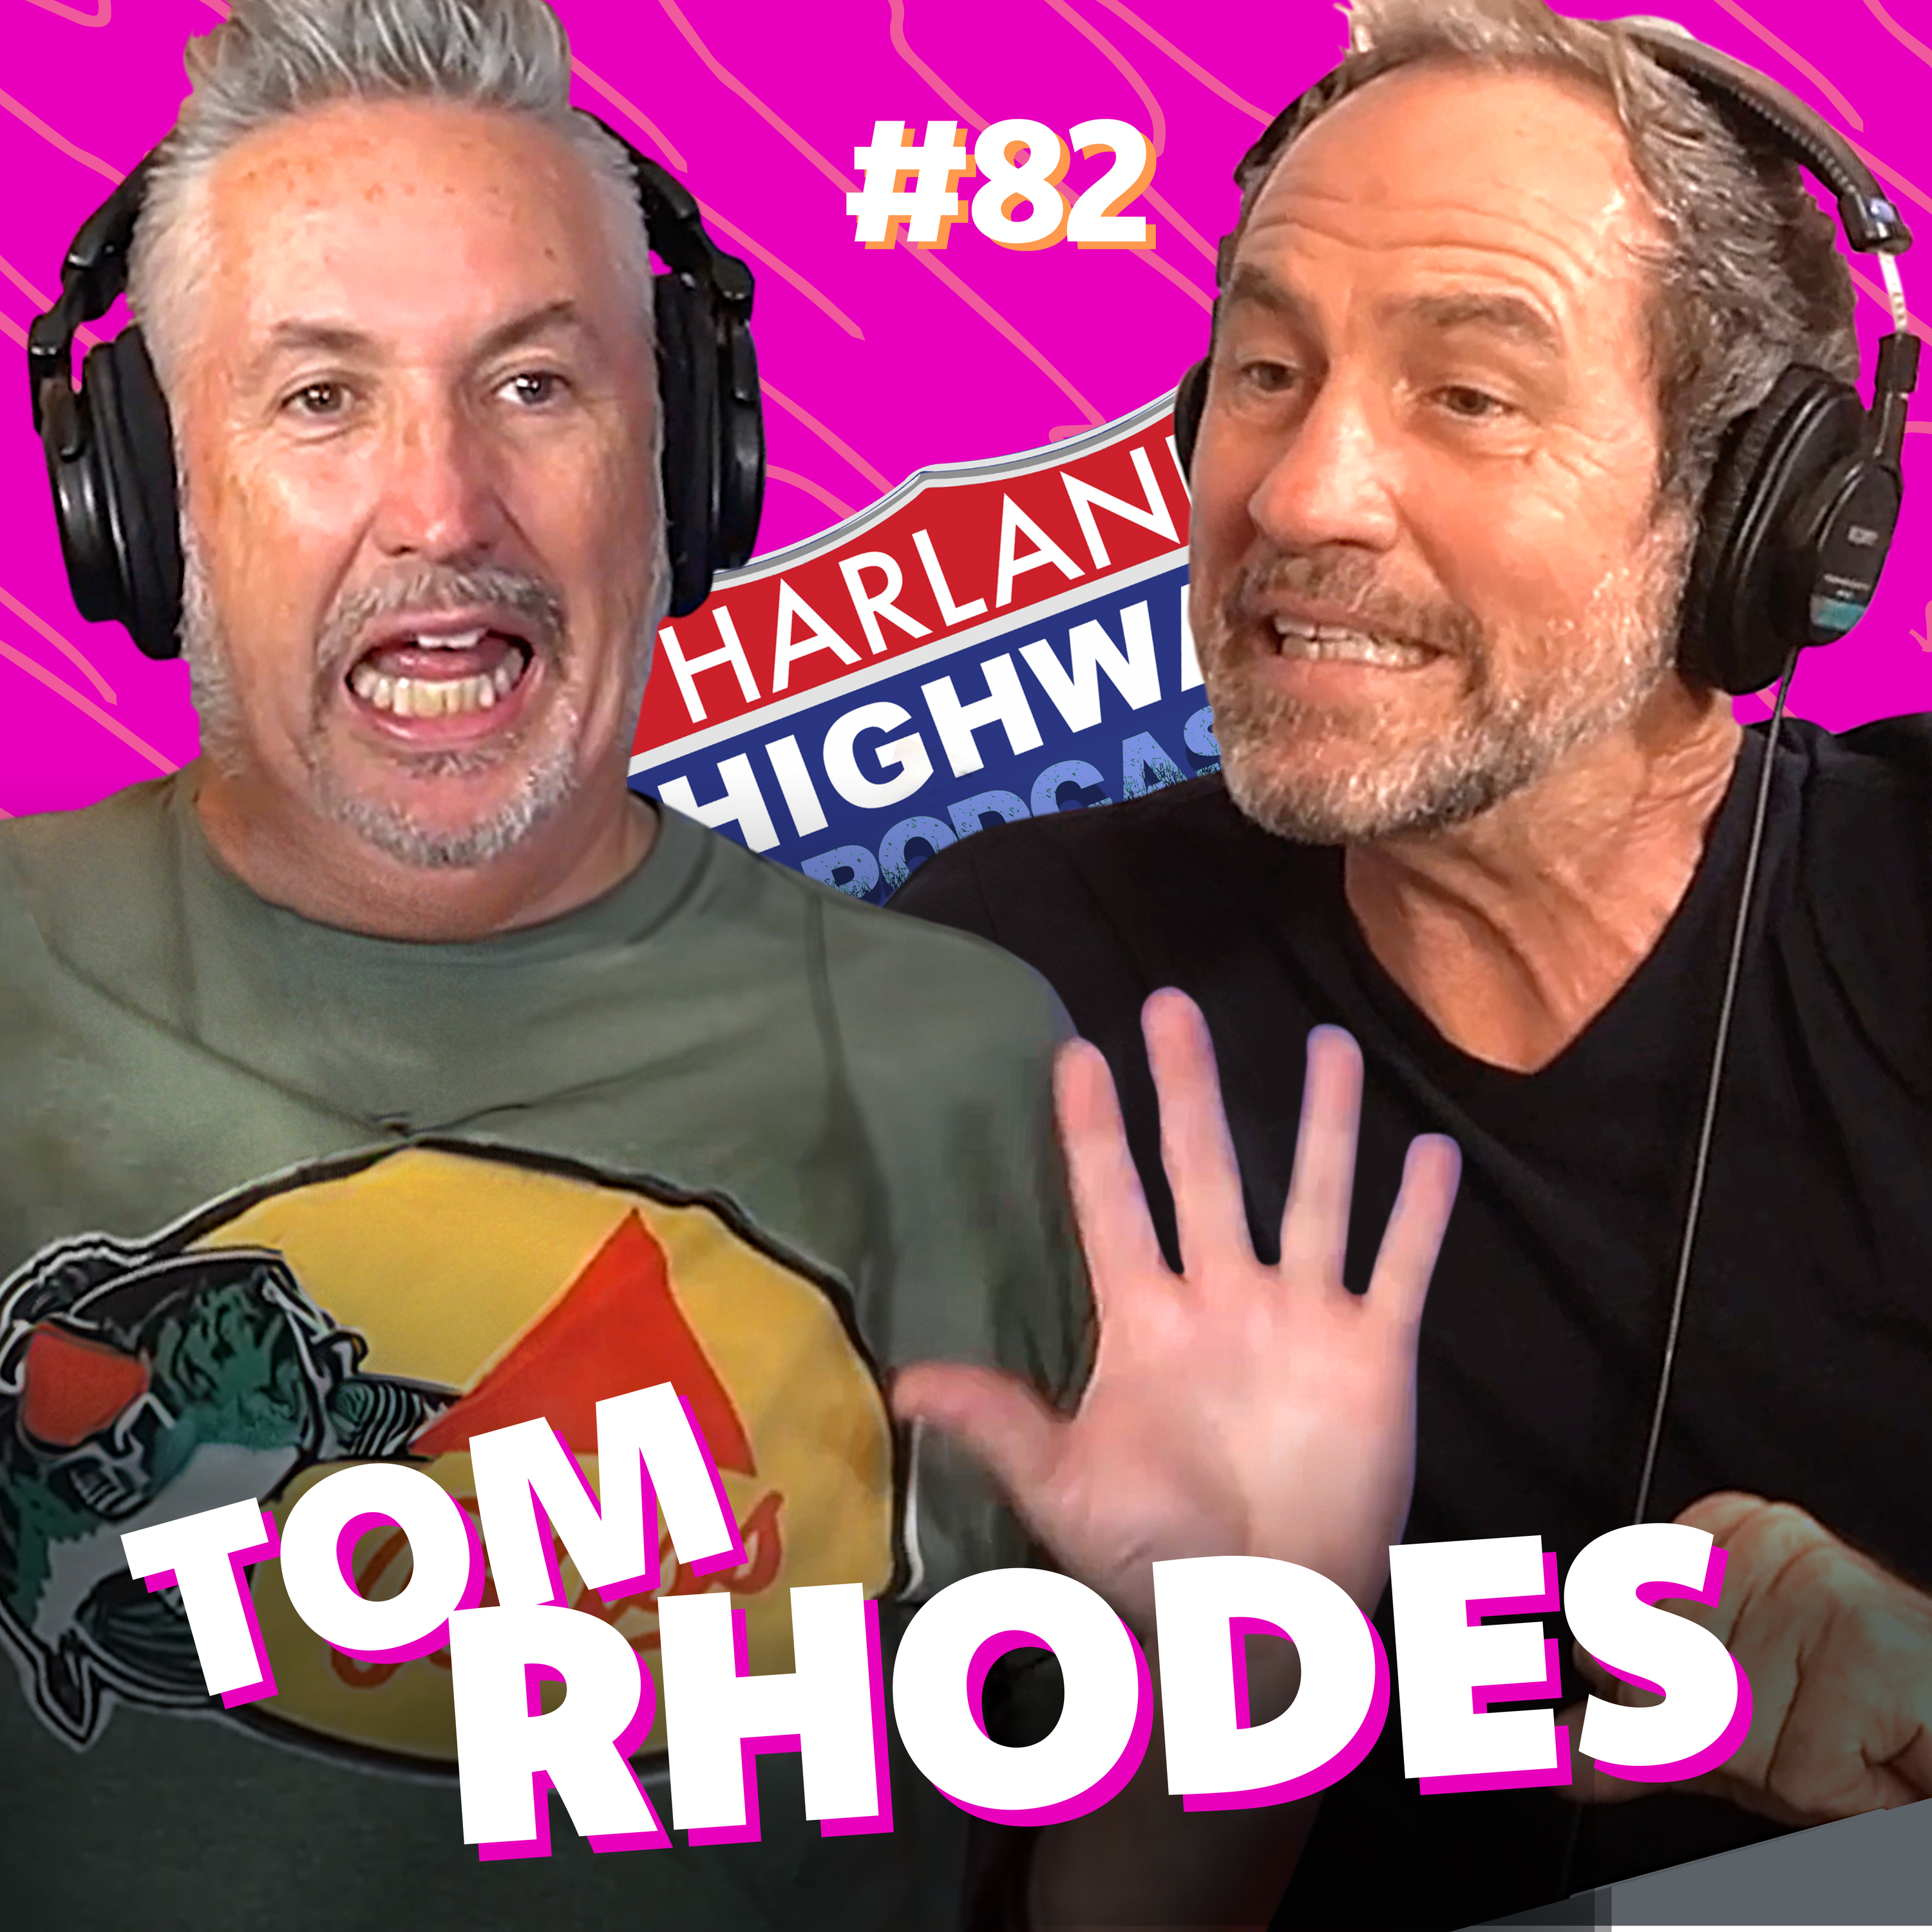 NEW Harland Highway # 82 - Comedian Tom Rhodes